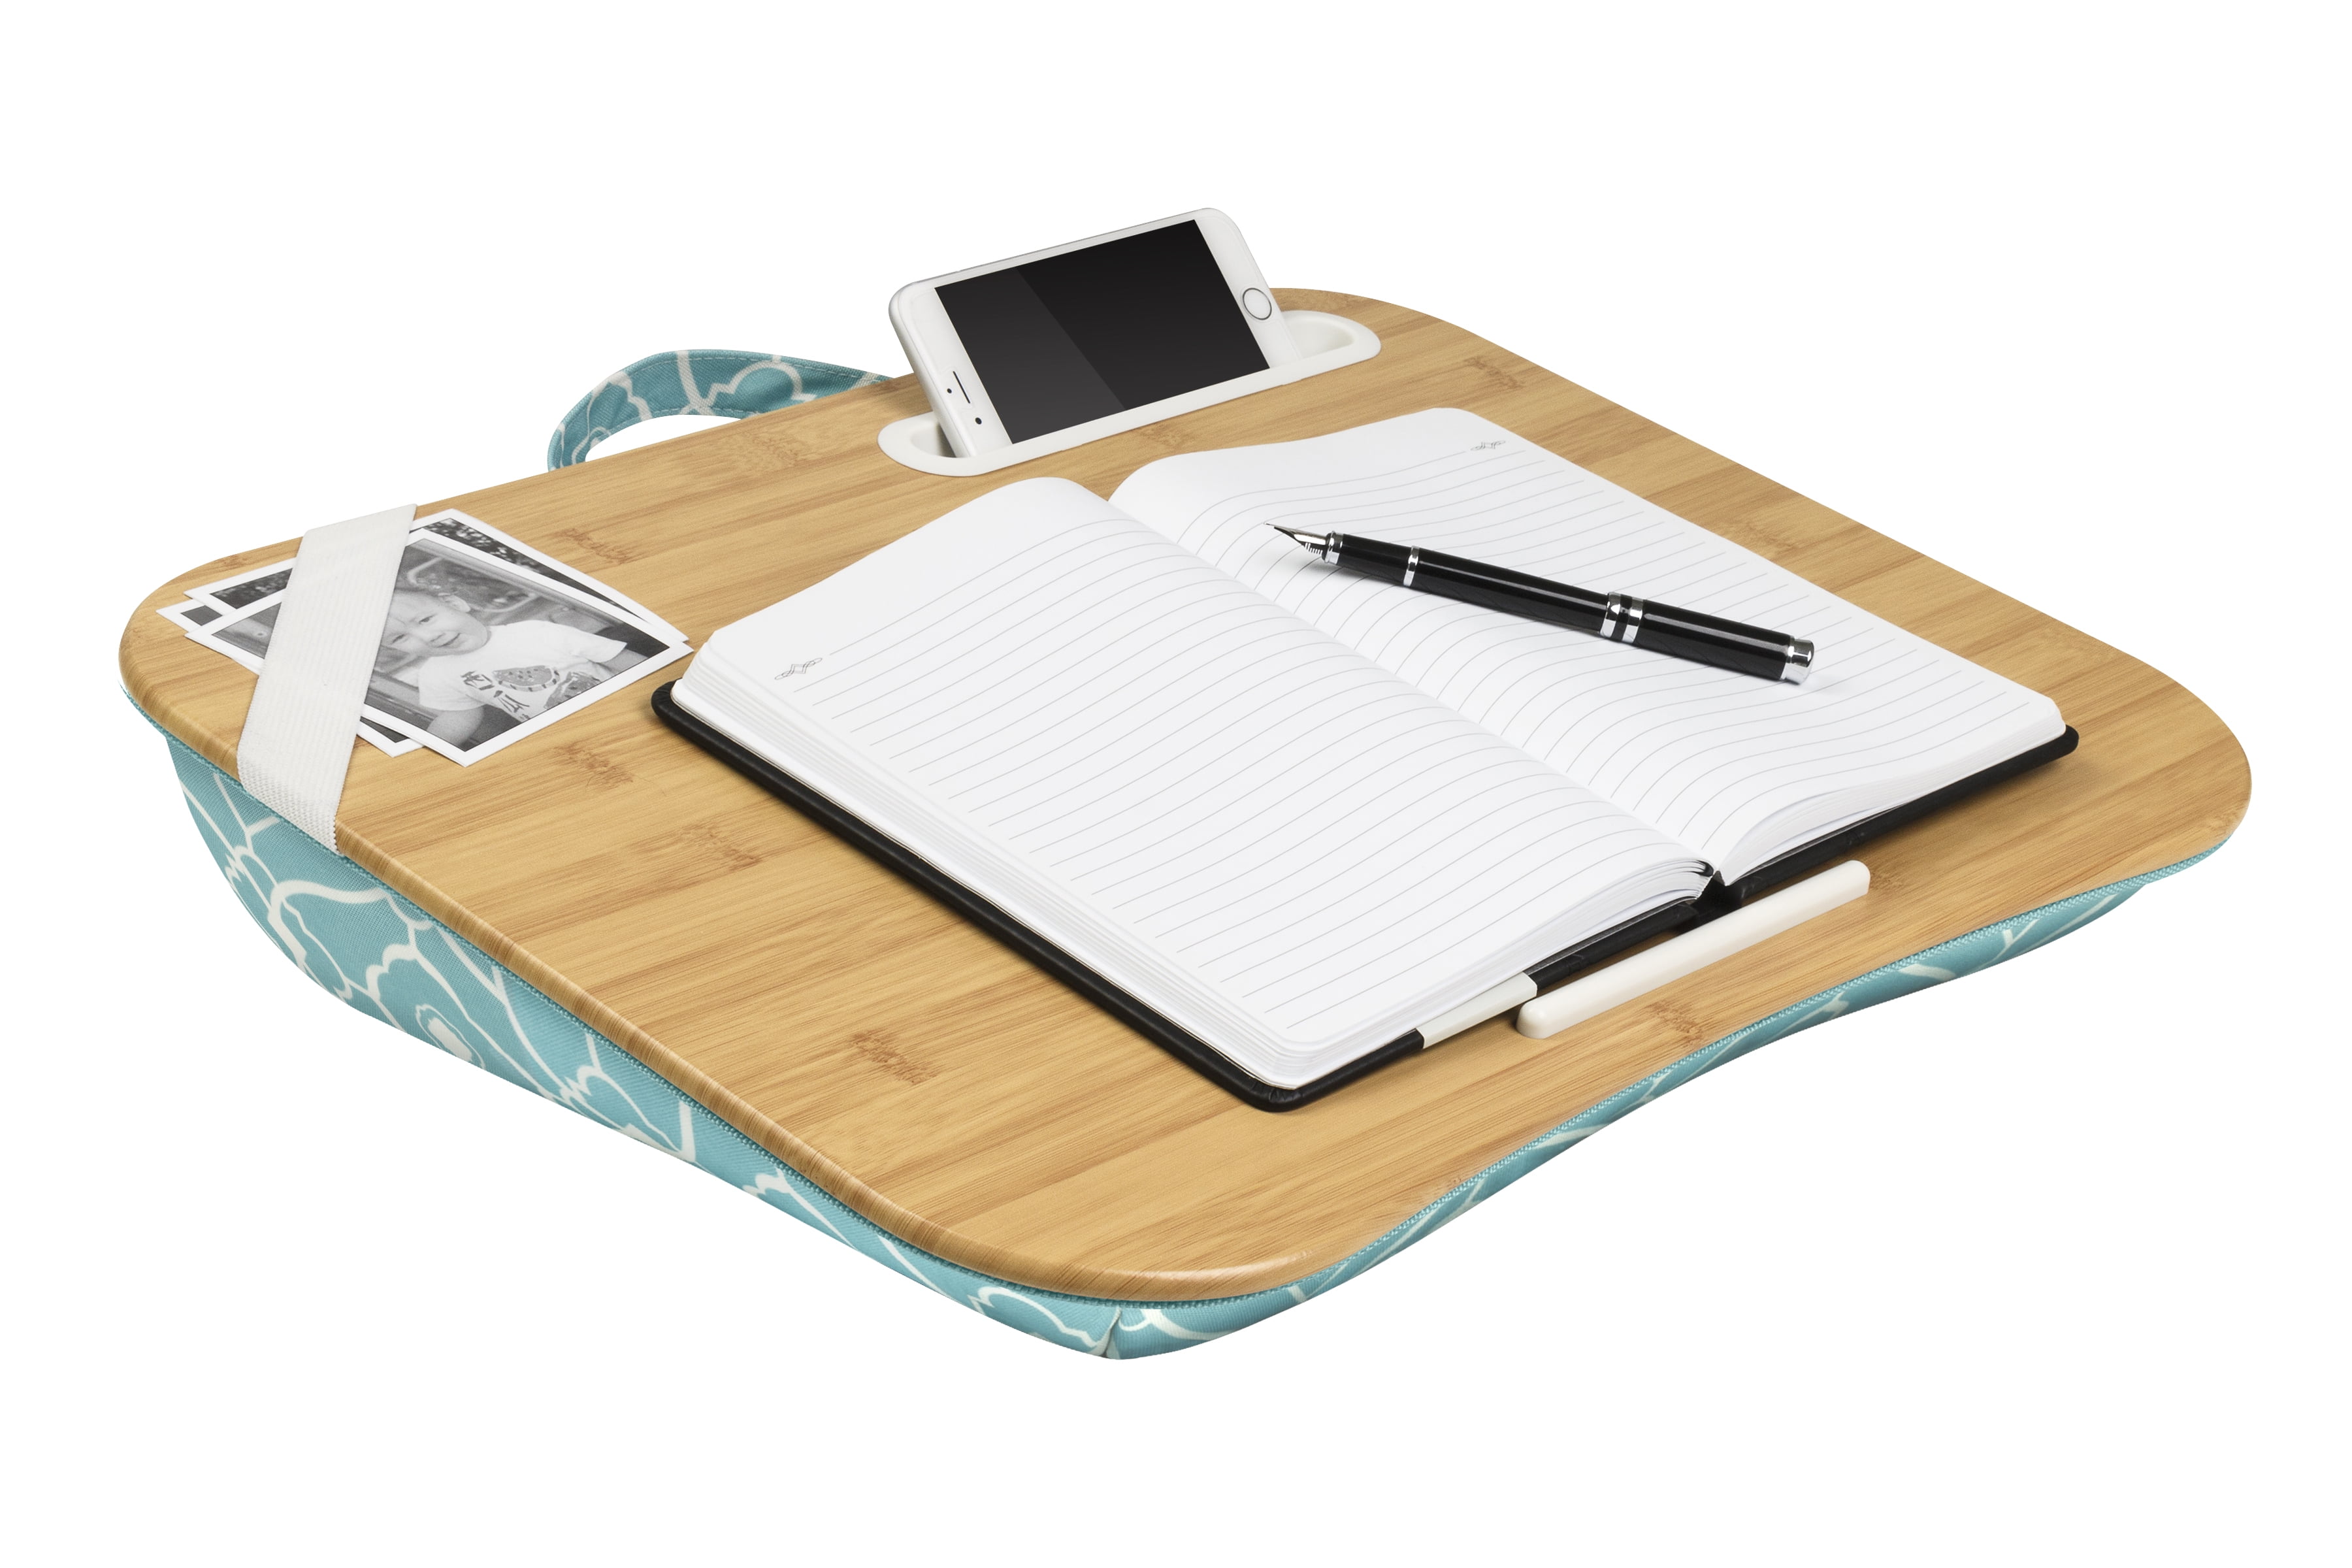 Designer Lap Desk Aqua Trellis Fits Up To 17 3 Laptop